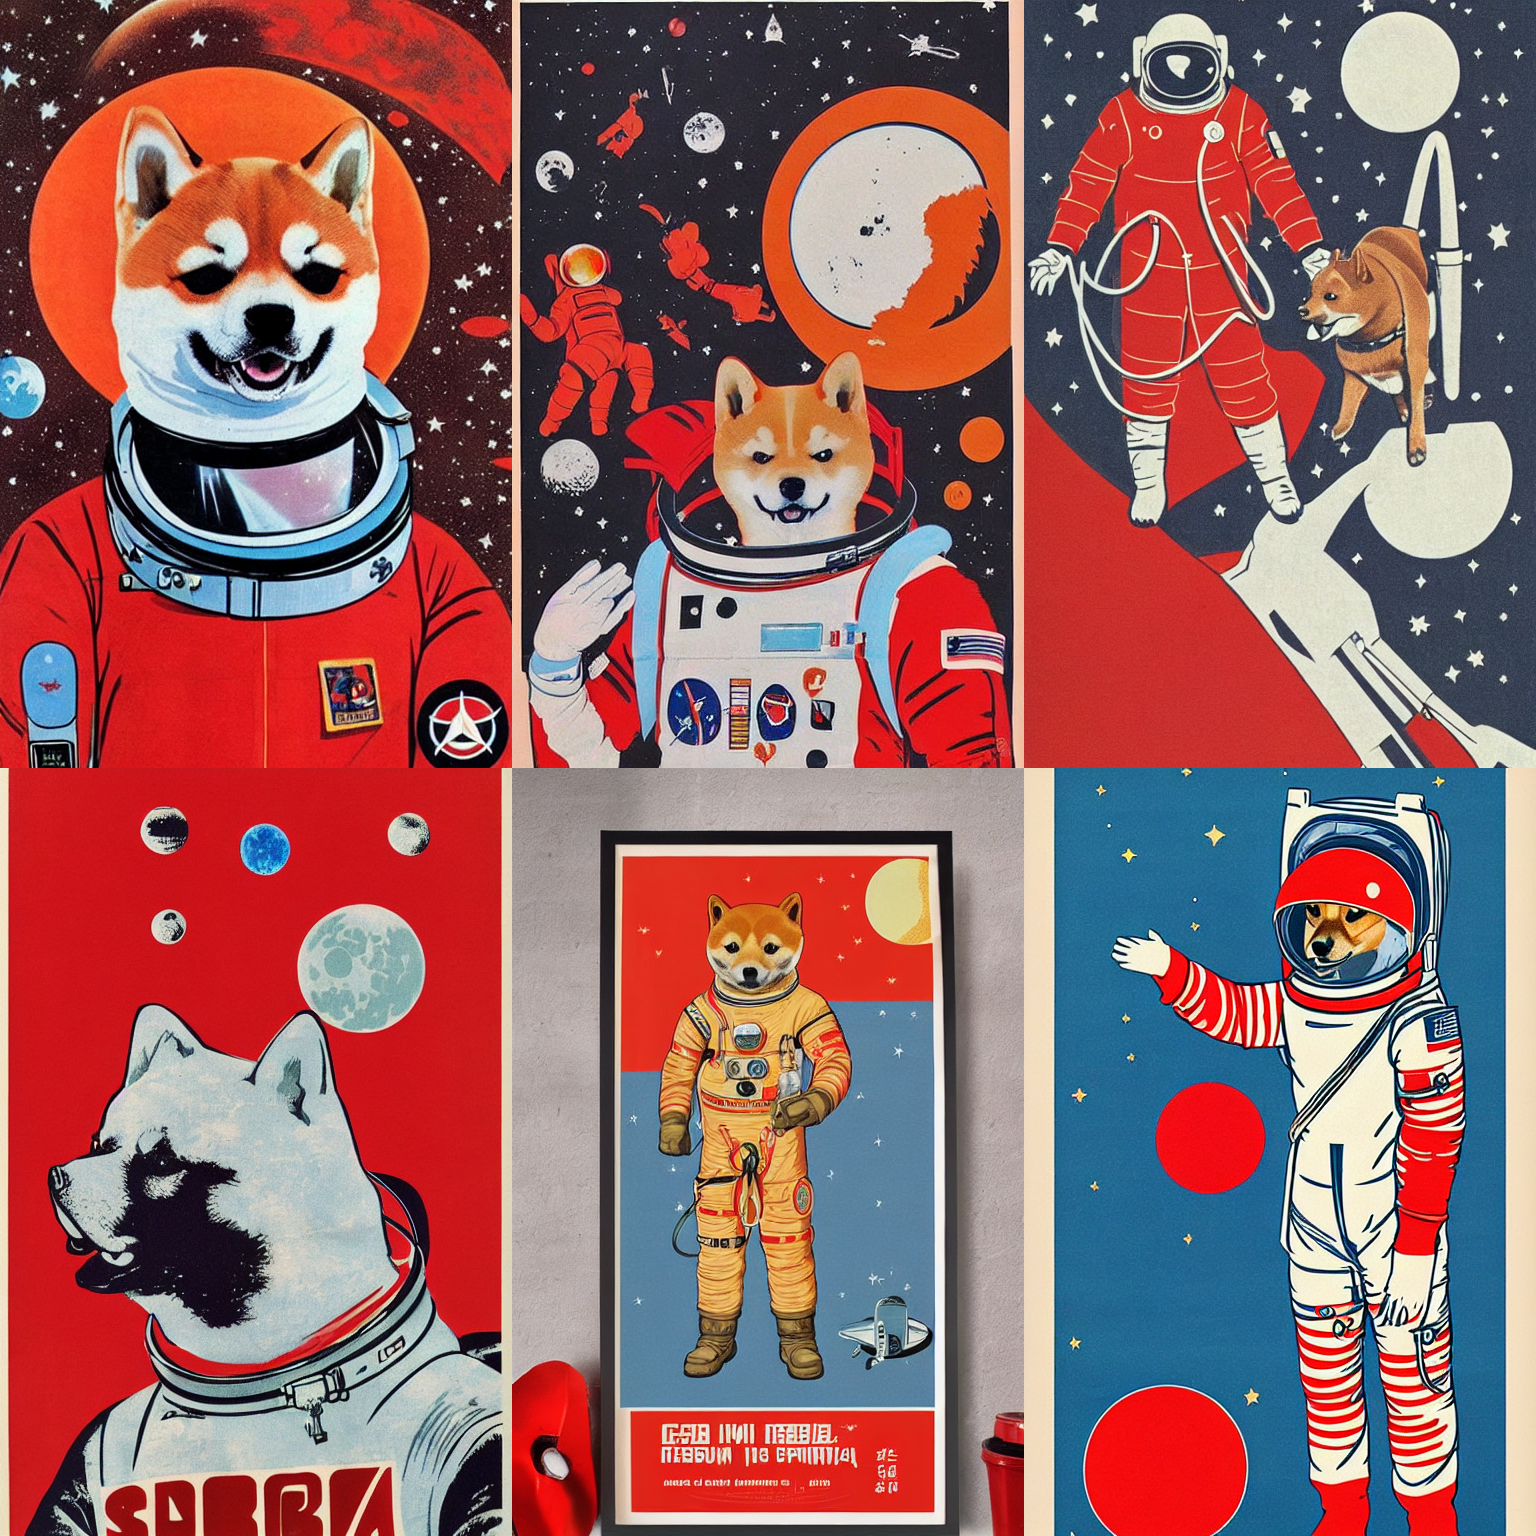 Shiba Inu cosmonaut portrait, Red spacesuit,moon mission,  60s poster, 1968 Soviet Japanese